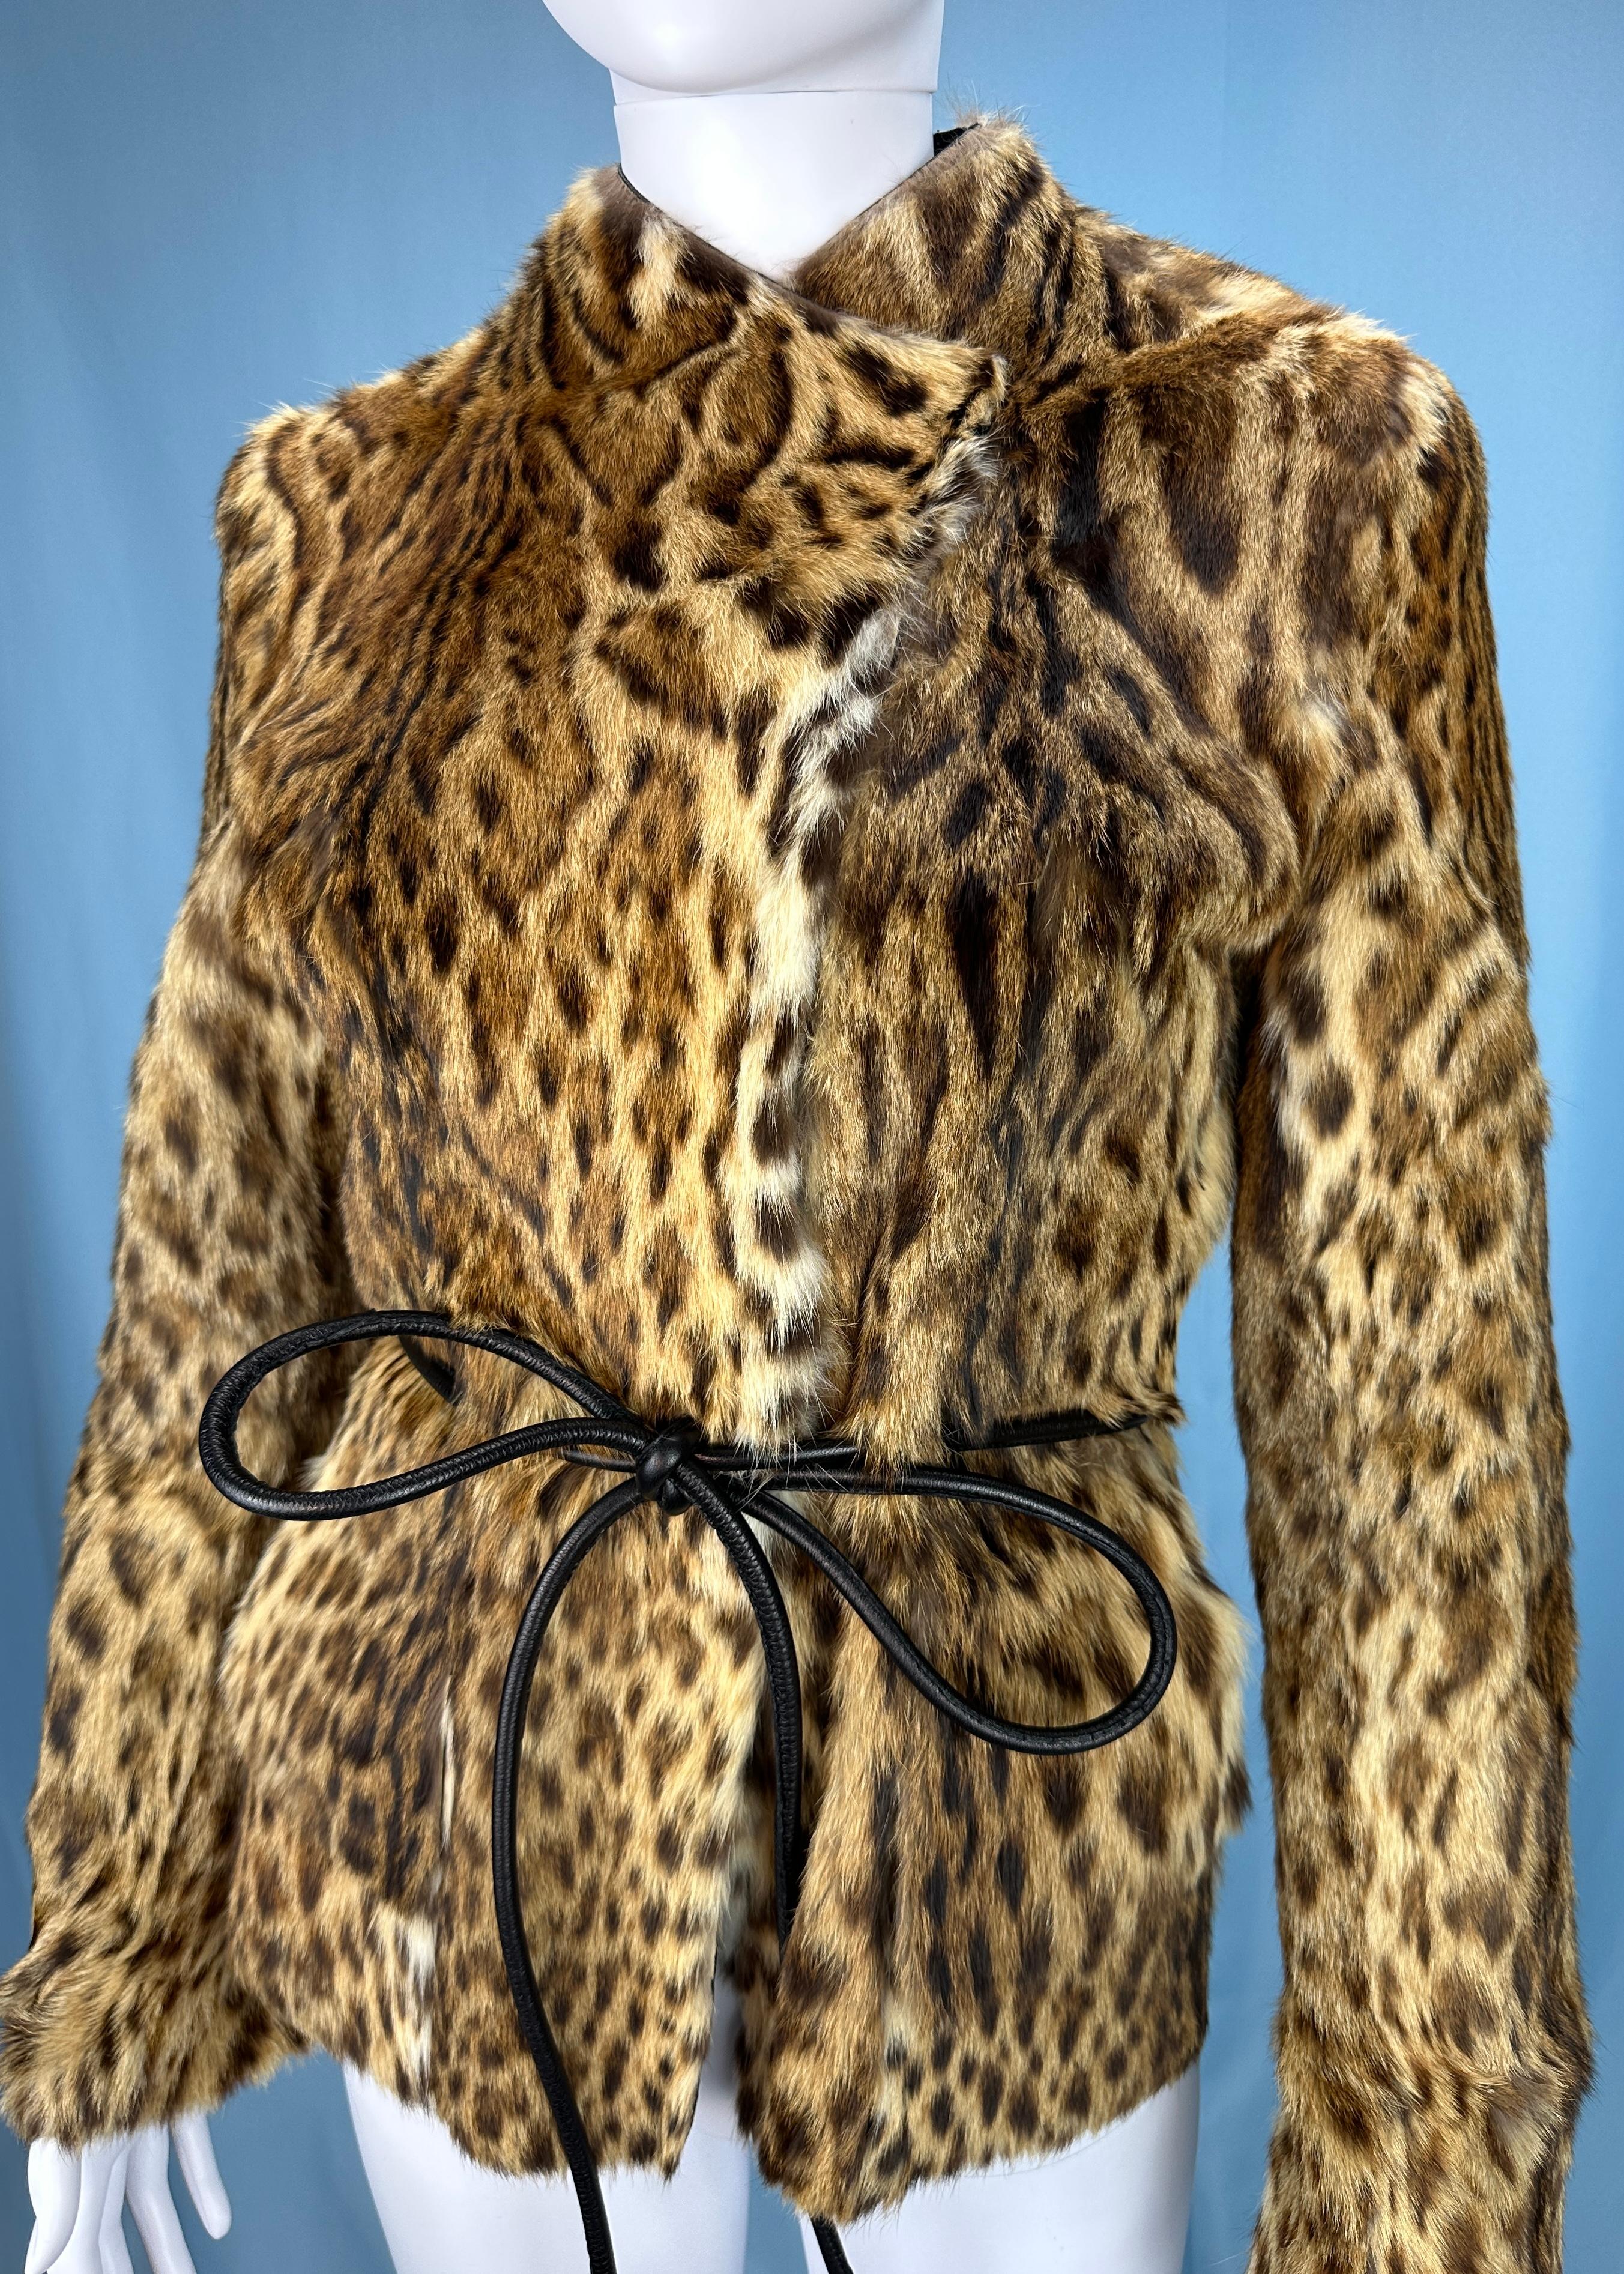 Gucci by Tom Ford Fall 1999 Runway Leopard Print Fur Jacket 3